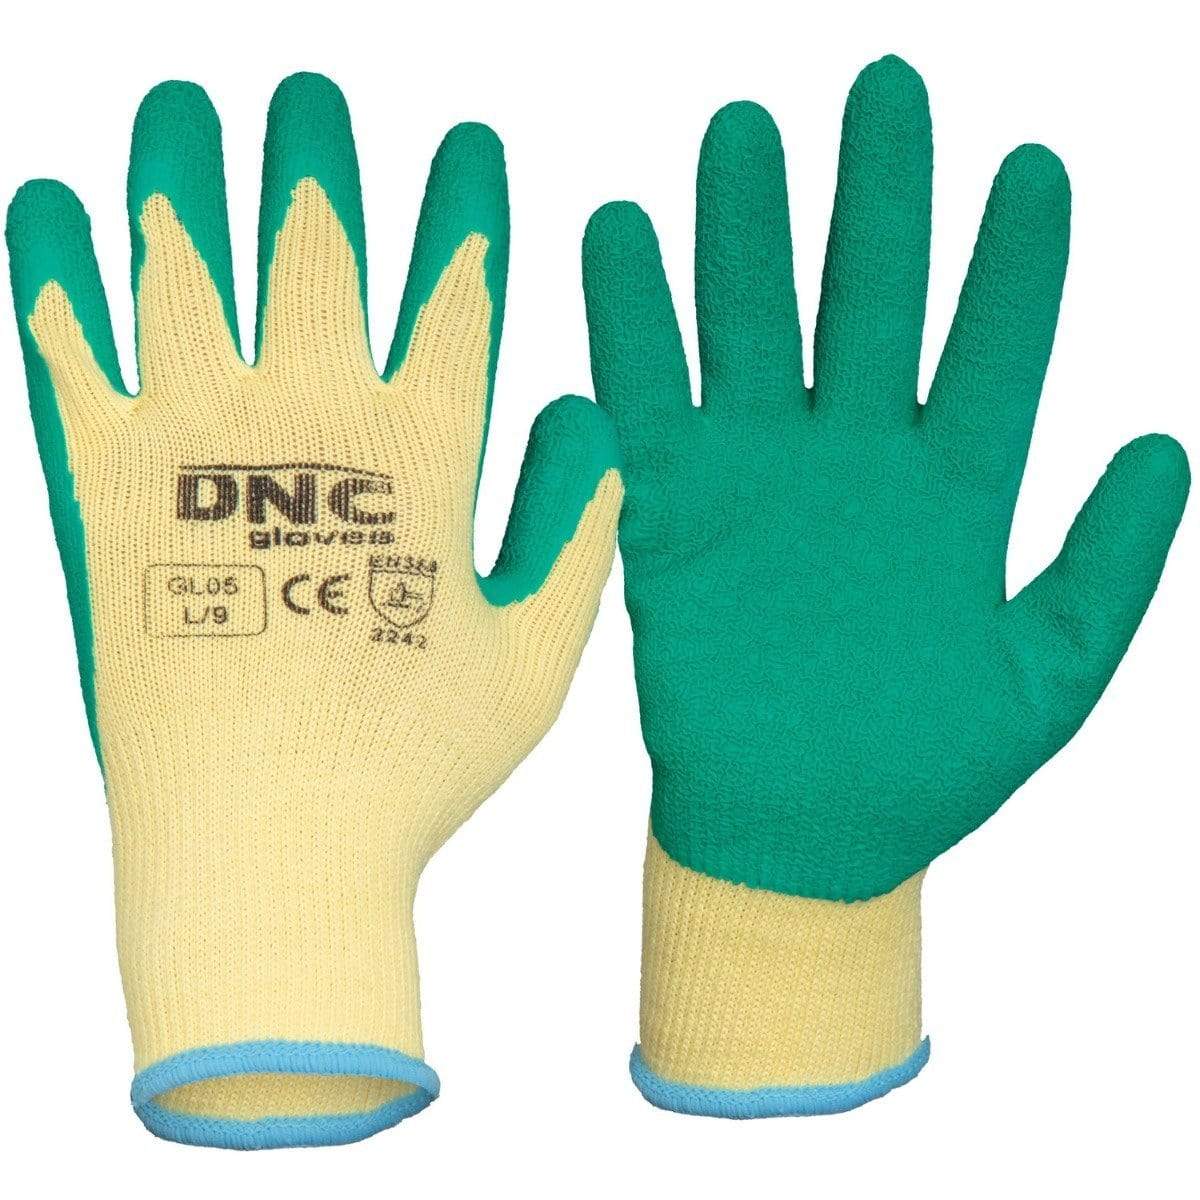 Dnc Workwear Latex- Premium - GL05 PPE DNC Workwear Green/Natural S/7 